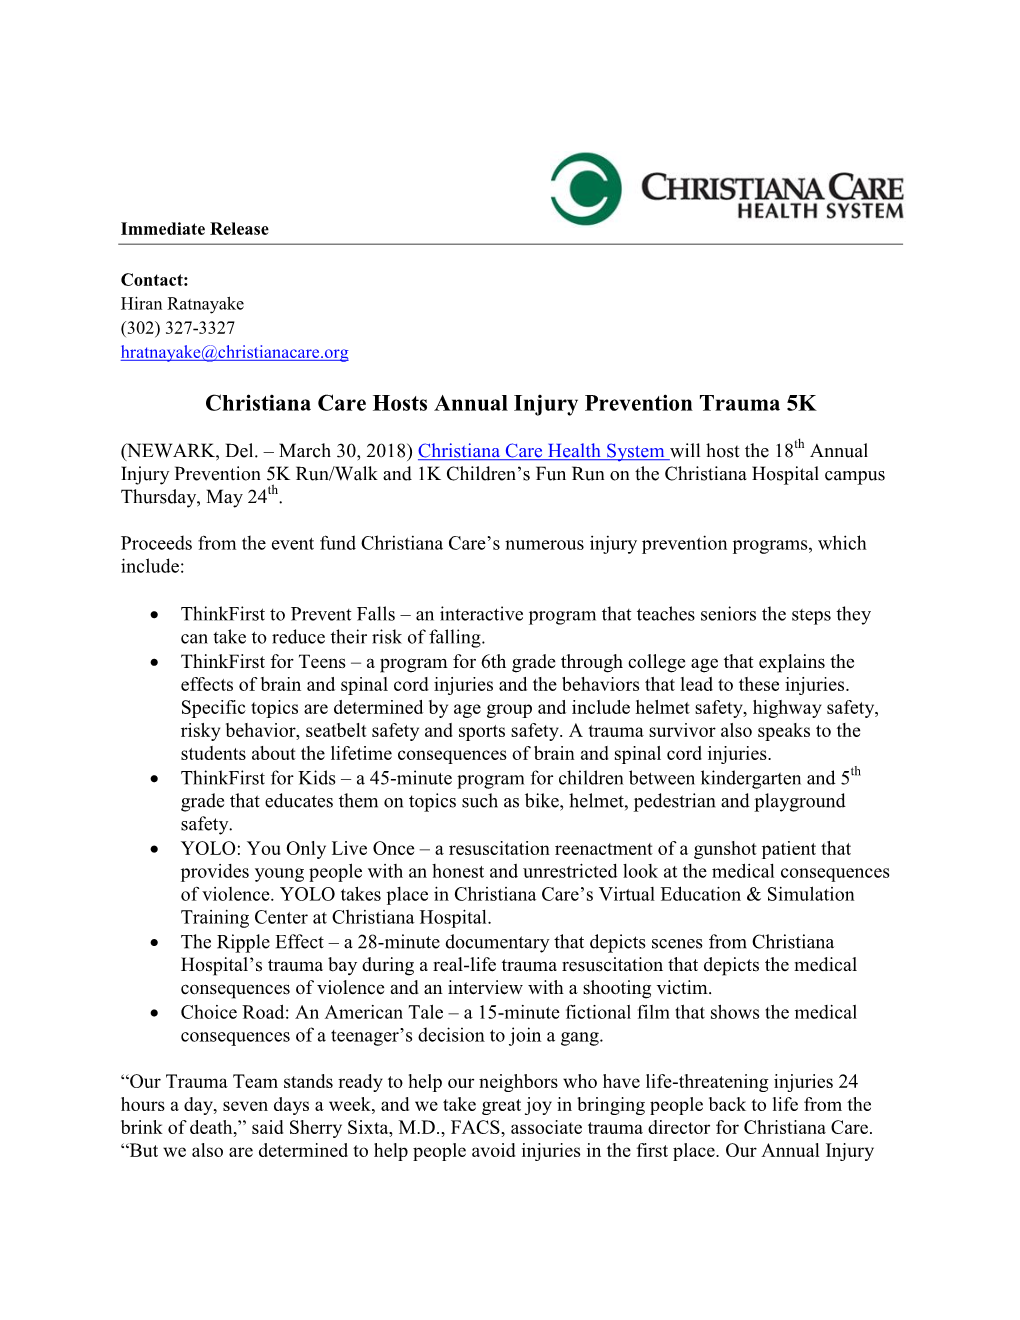 Christiana Care Hosts Annual Injury Prevention Trauma 5K